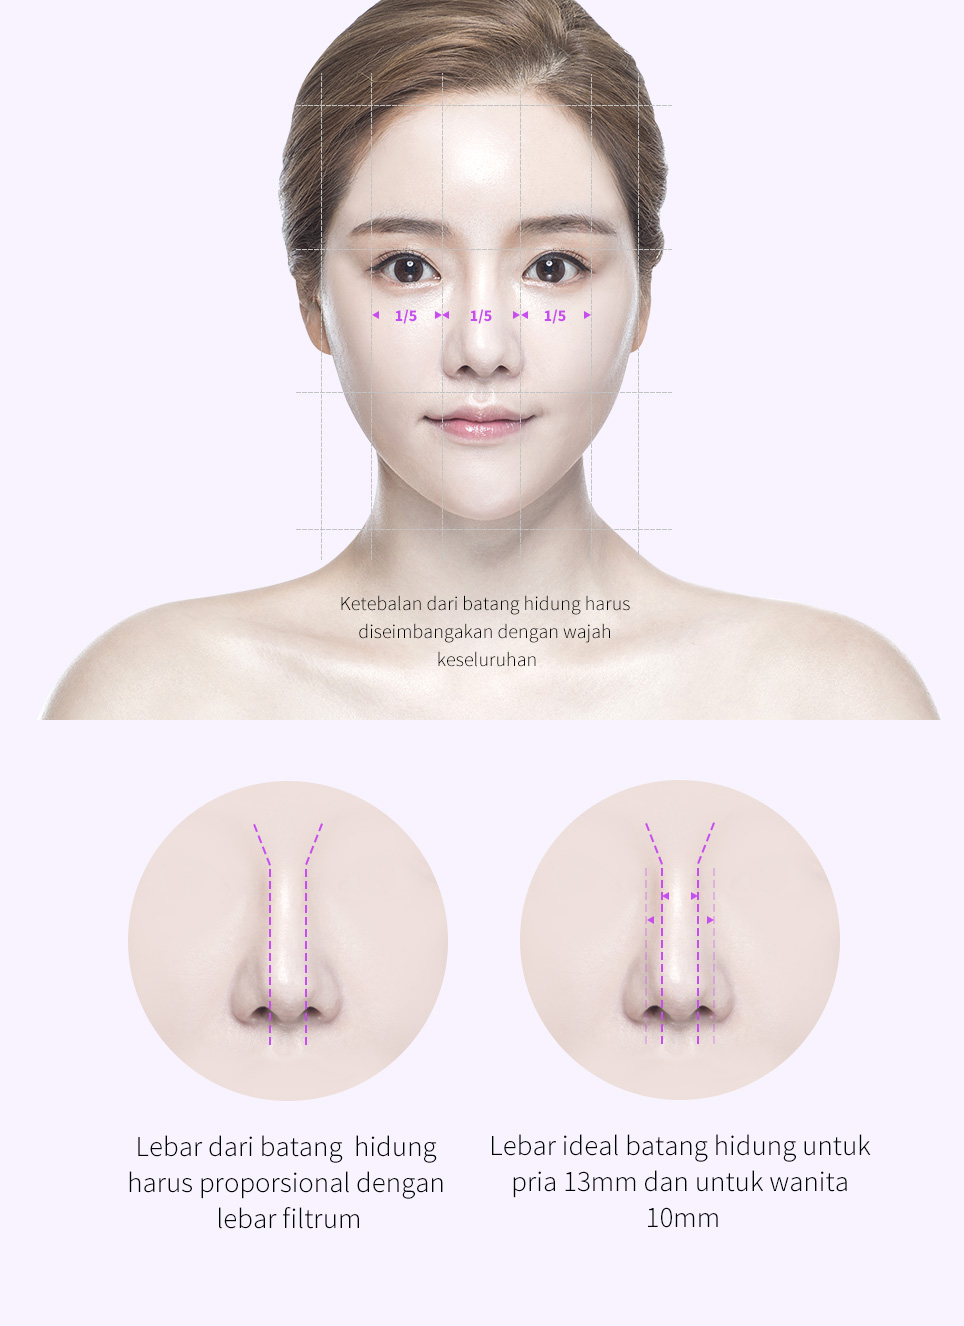 Titik Operasi untuk Operasi Batang Hidung Lebar (Lateral Osteotomy)